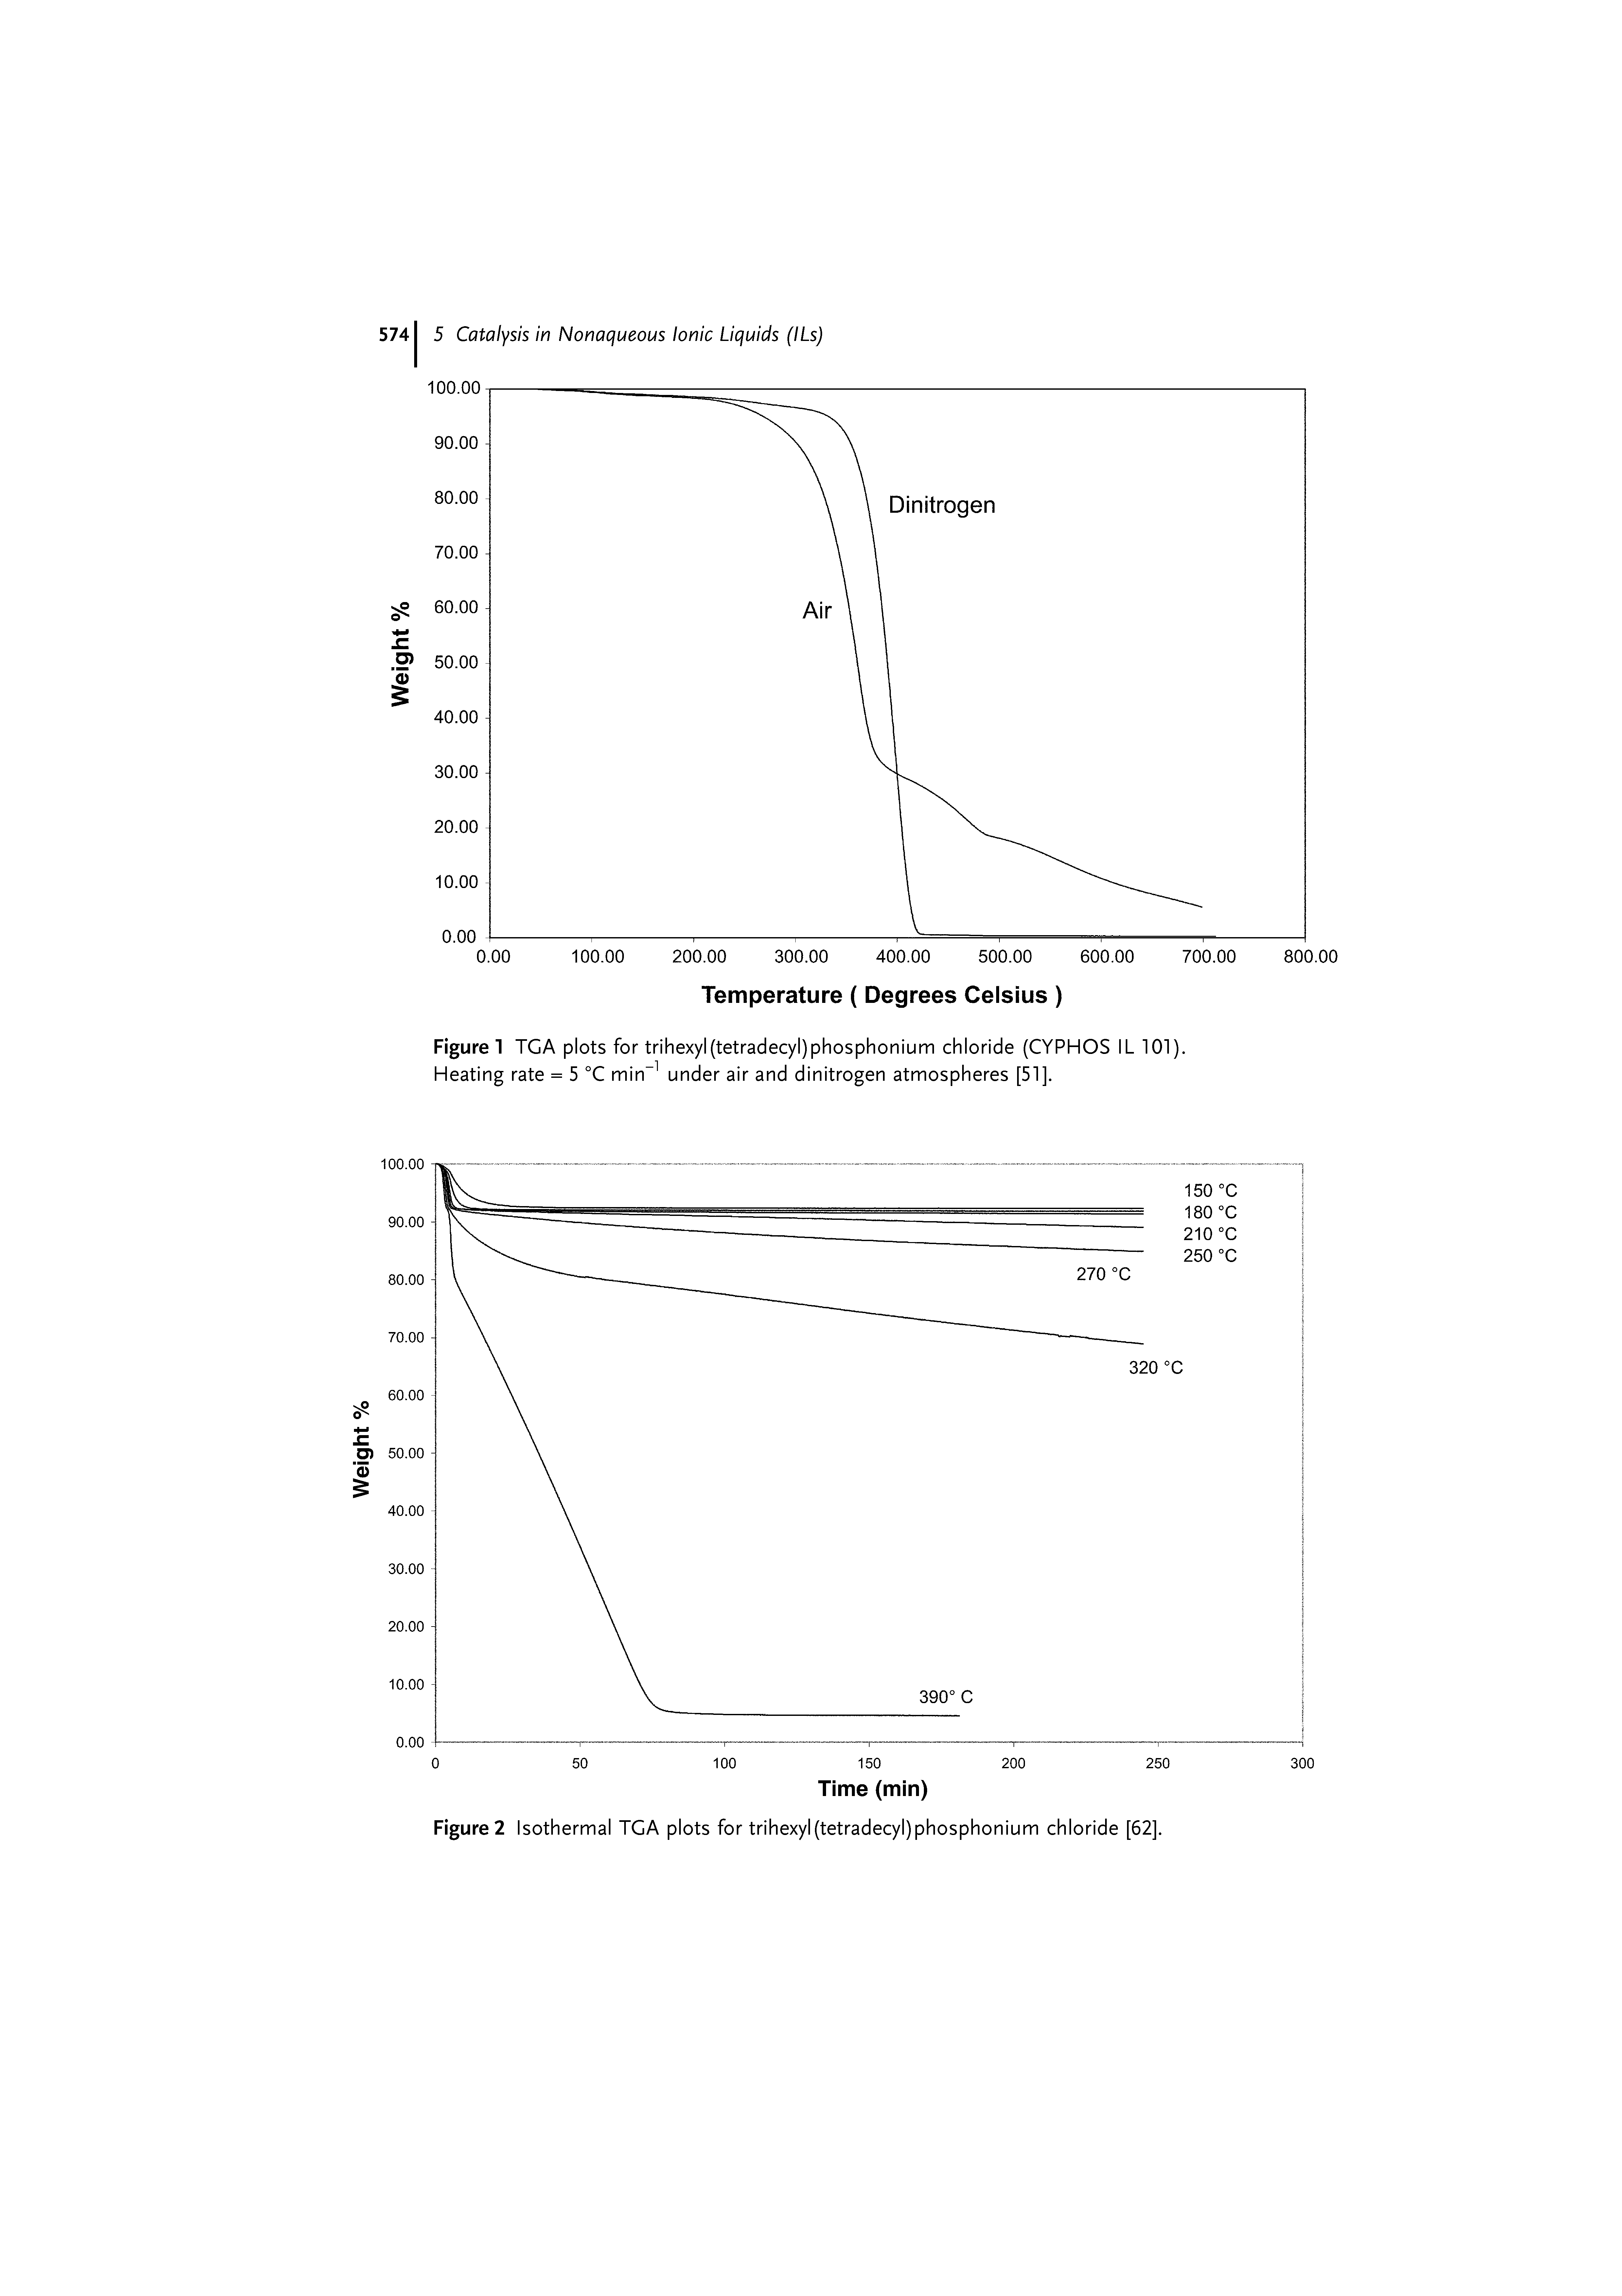 Figure 2 Isothermal TGA plots for trihexyl (tetradecyl)phosphonium chloride [62].